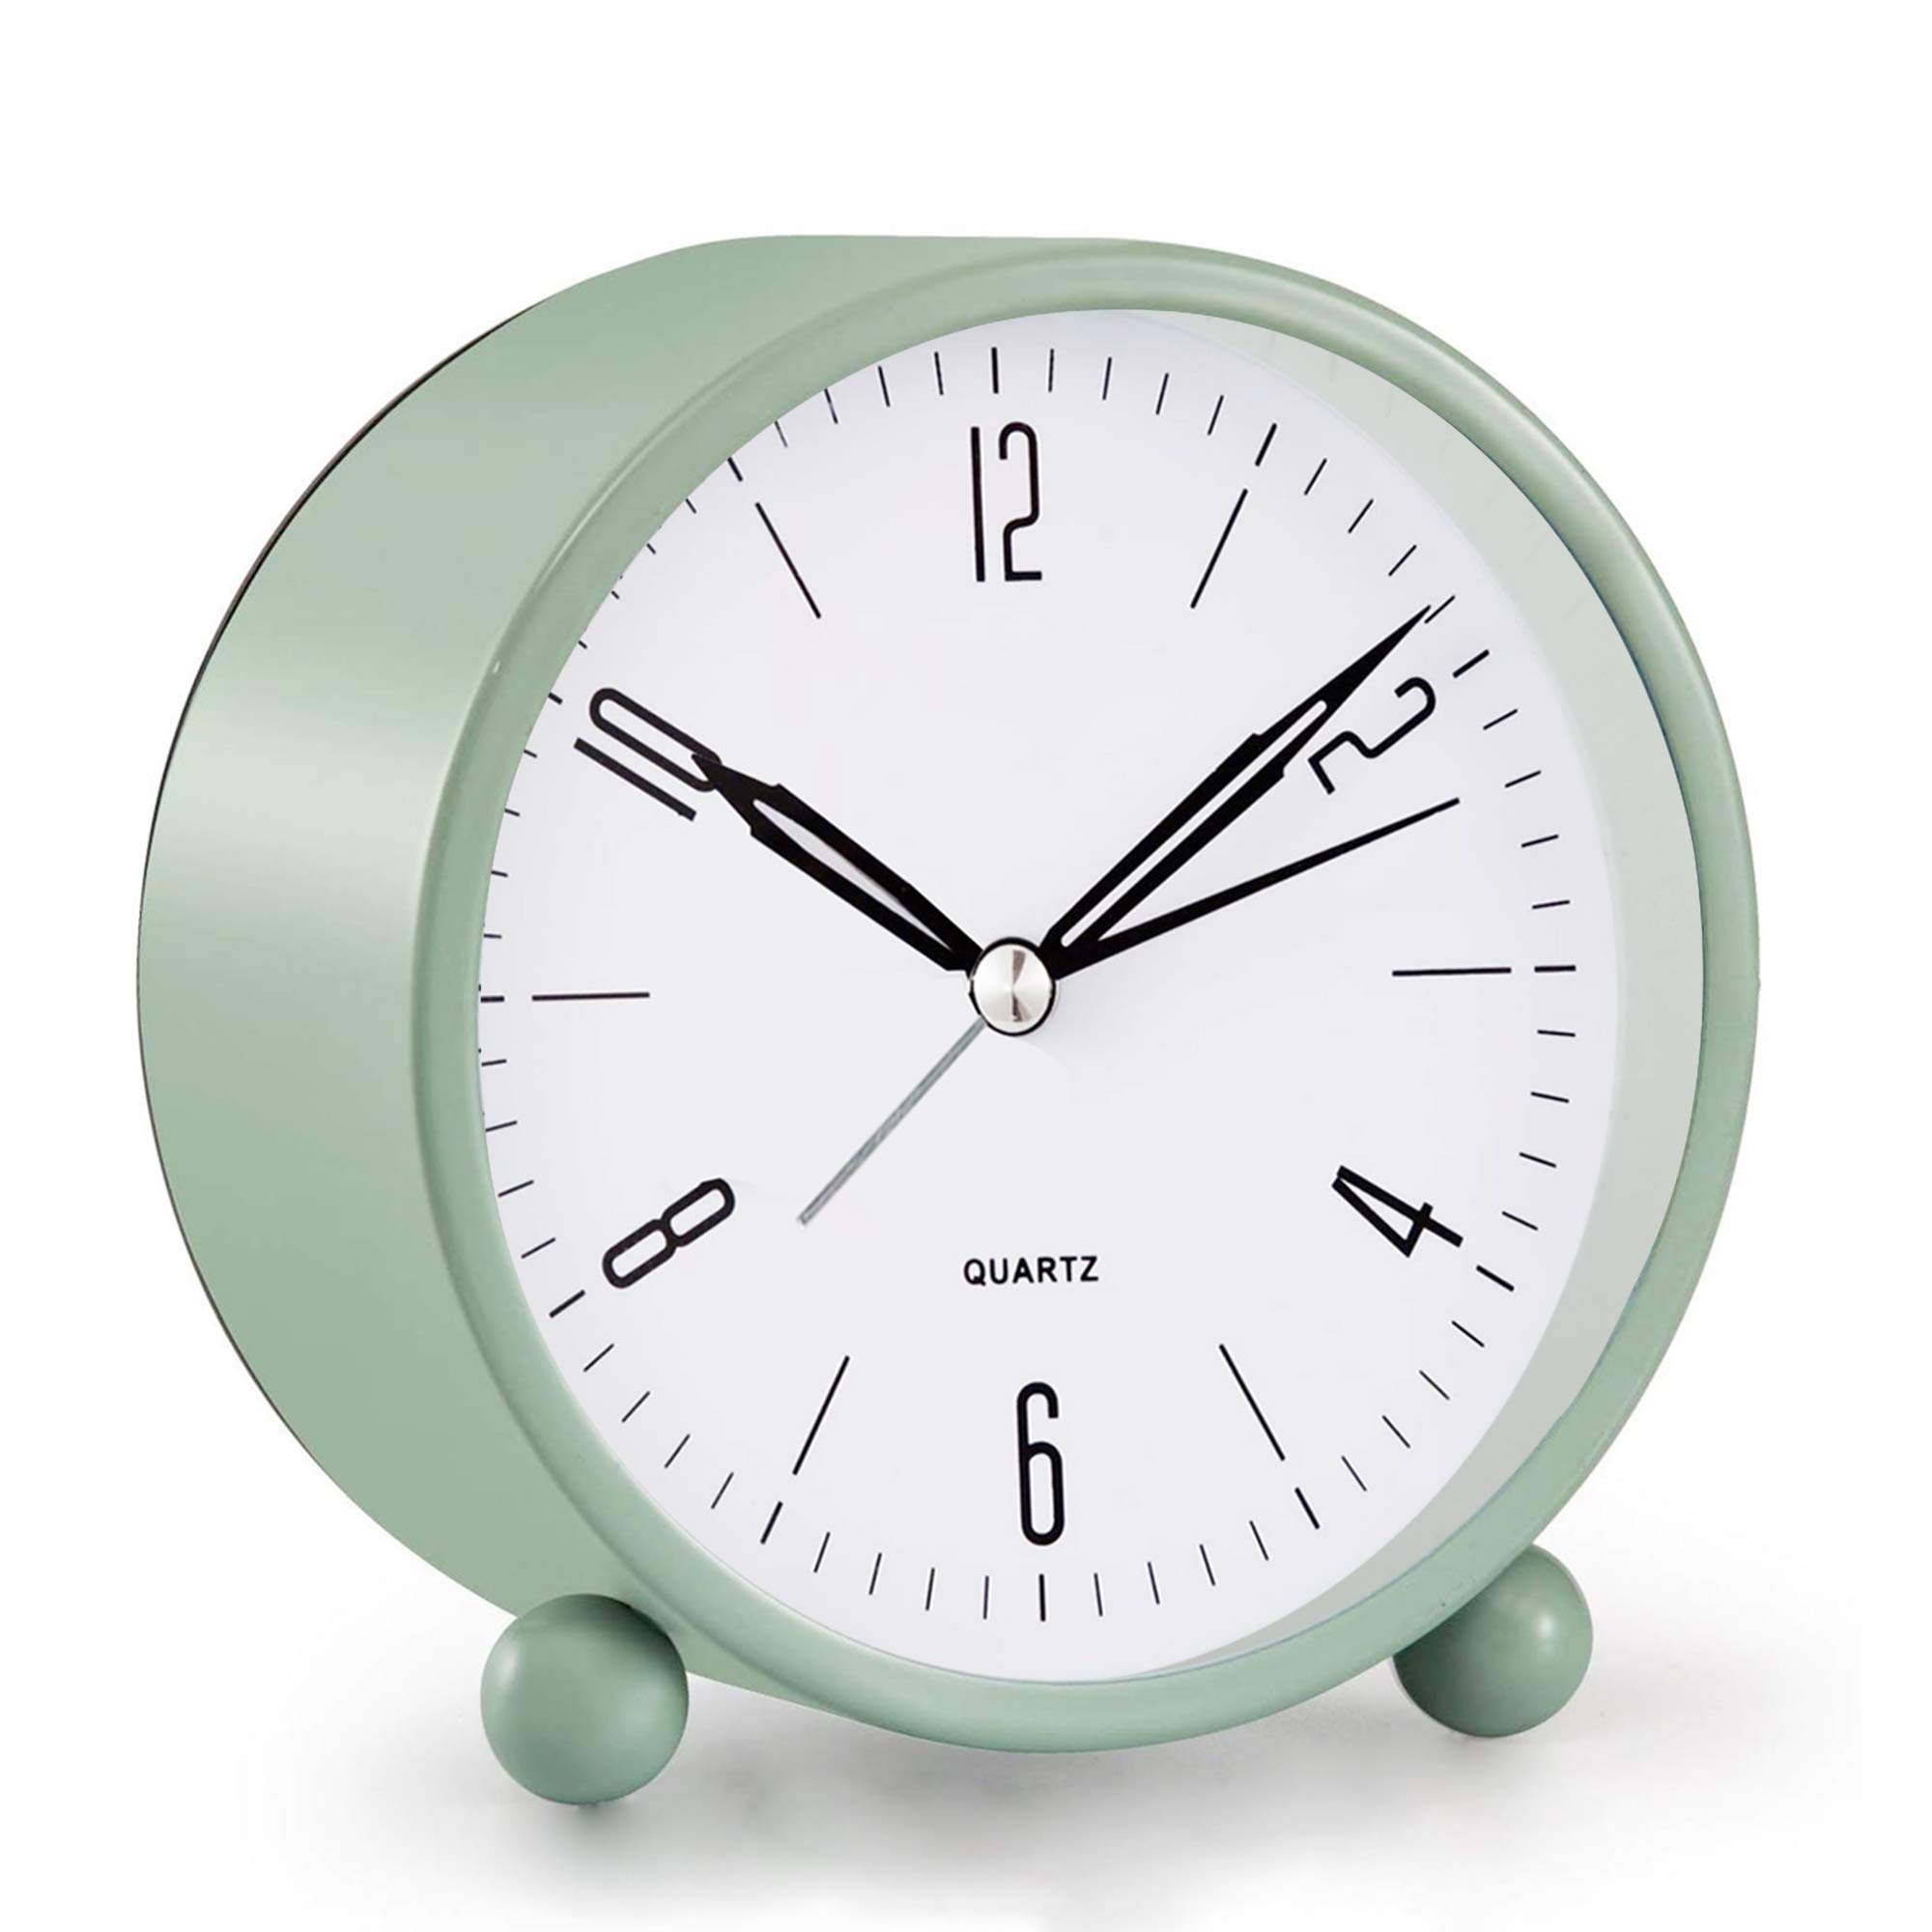 JALL Analog Alarm Clock